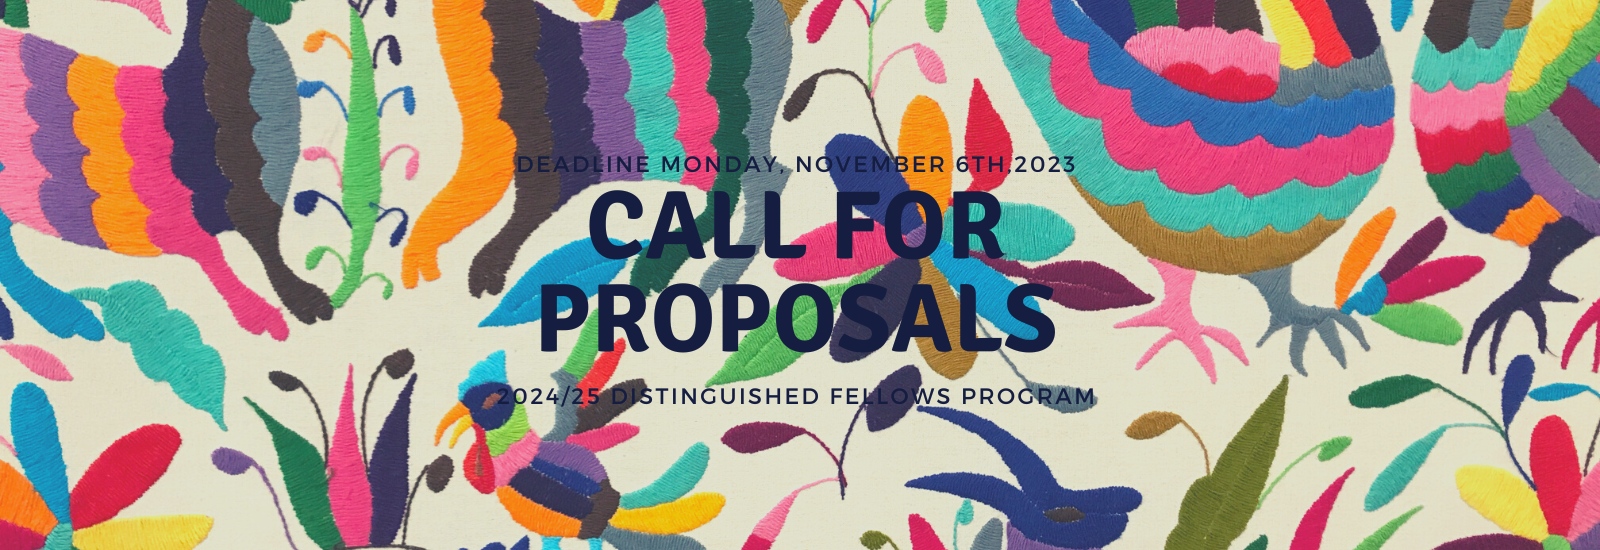 2024-25-deadline-call-for-proposals-1600-x-550.jpg